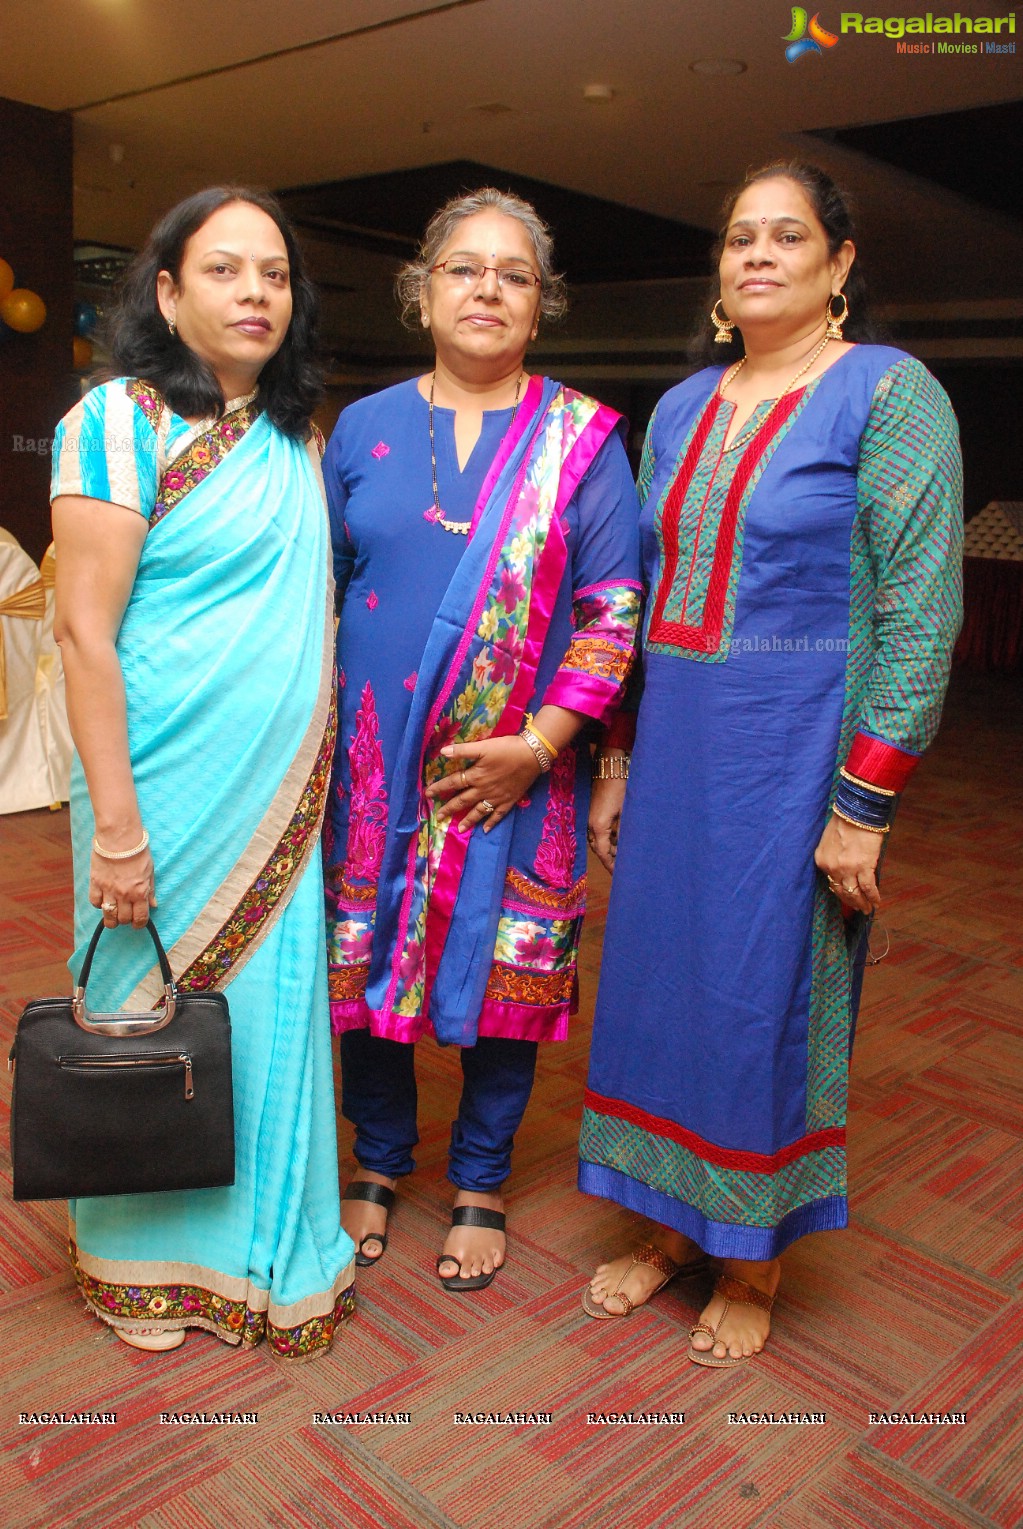 Sankalp Grand Tambola 2014 at Jalpaan, Hyderabad